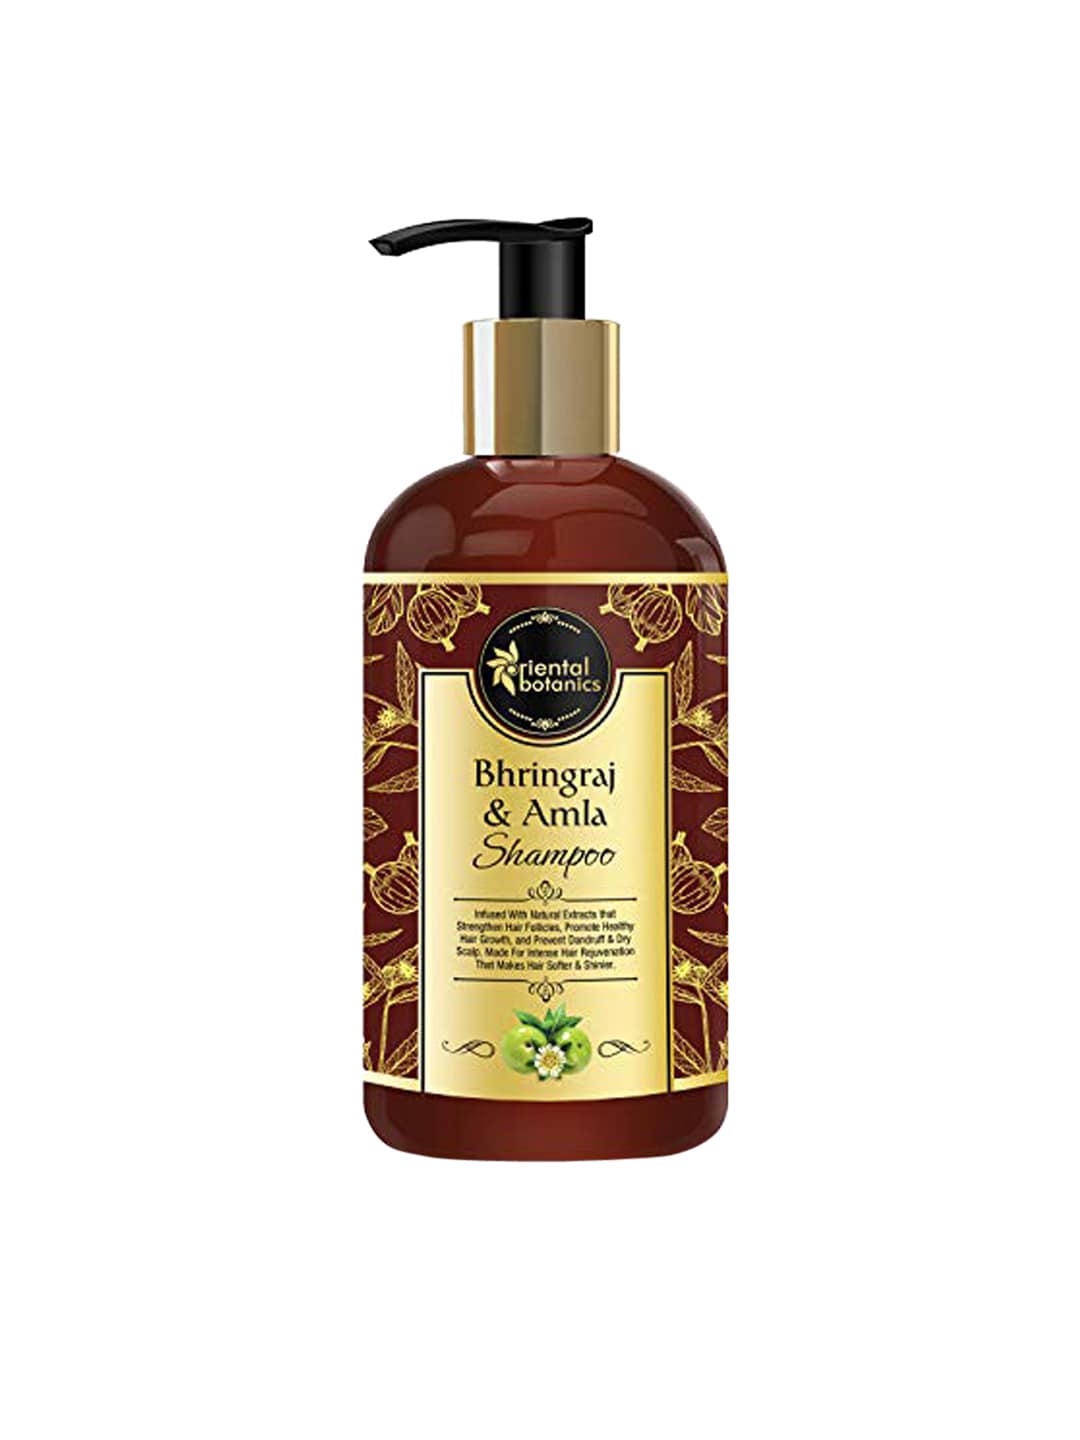 Oriental Botanics Bhringraj & Amla Hair Shampoo 300 ml Price in India